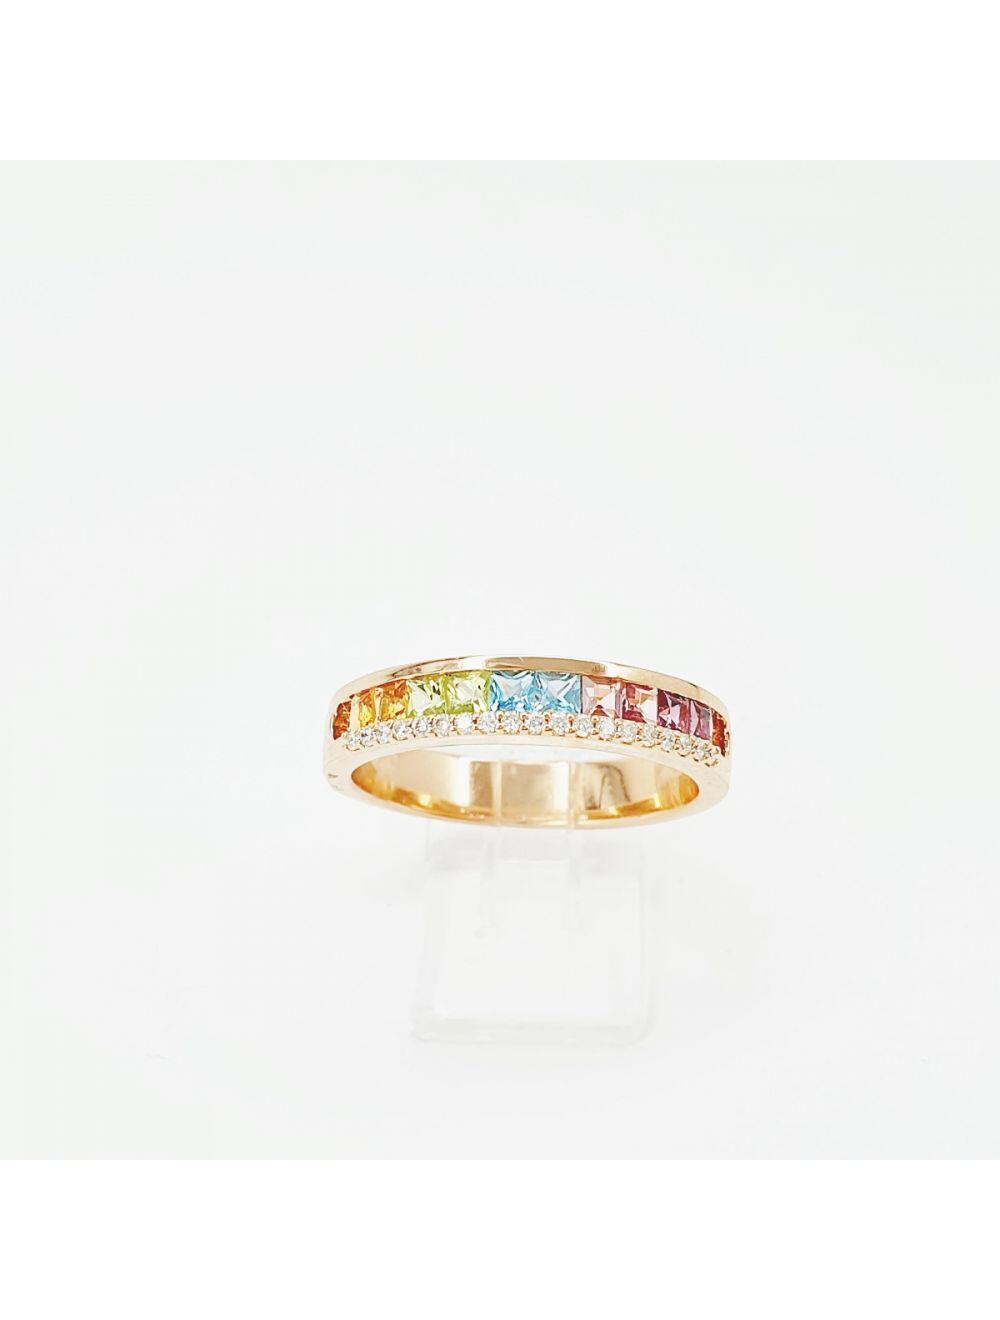 # Rose gold ring ' Rainbow ' 0.2ct lemon quartz, 0.2ct citrine, 0.2ct rhodonite, 0.2ct blue topaz, 0.2ct pink tourmaline and 0.10ct